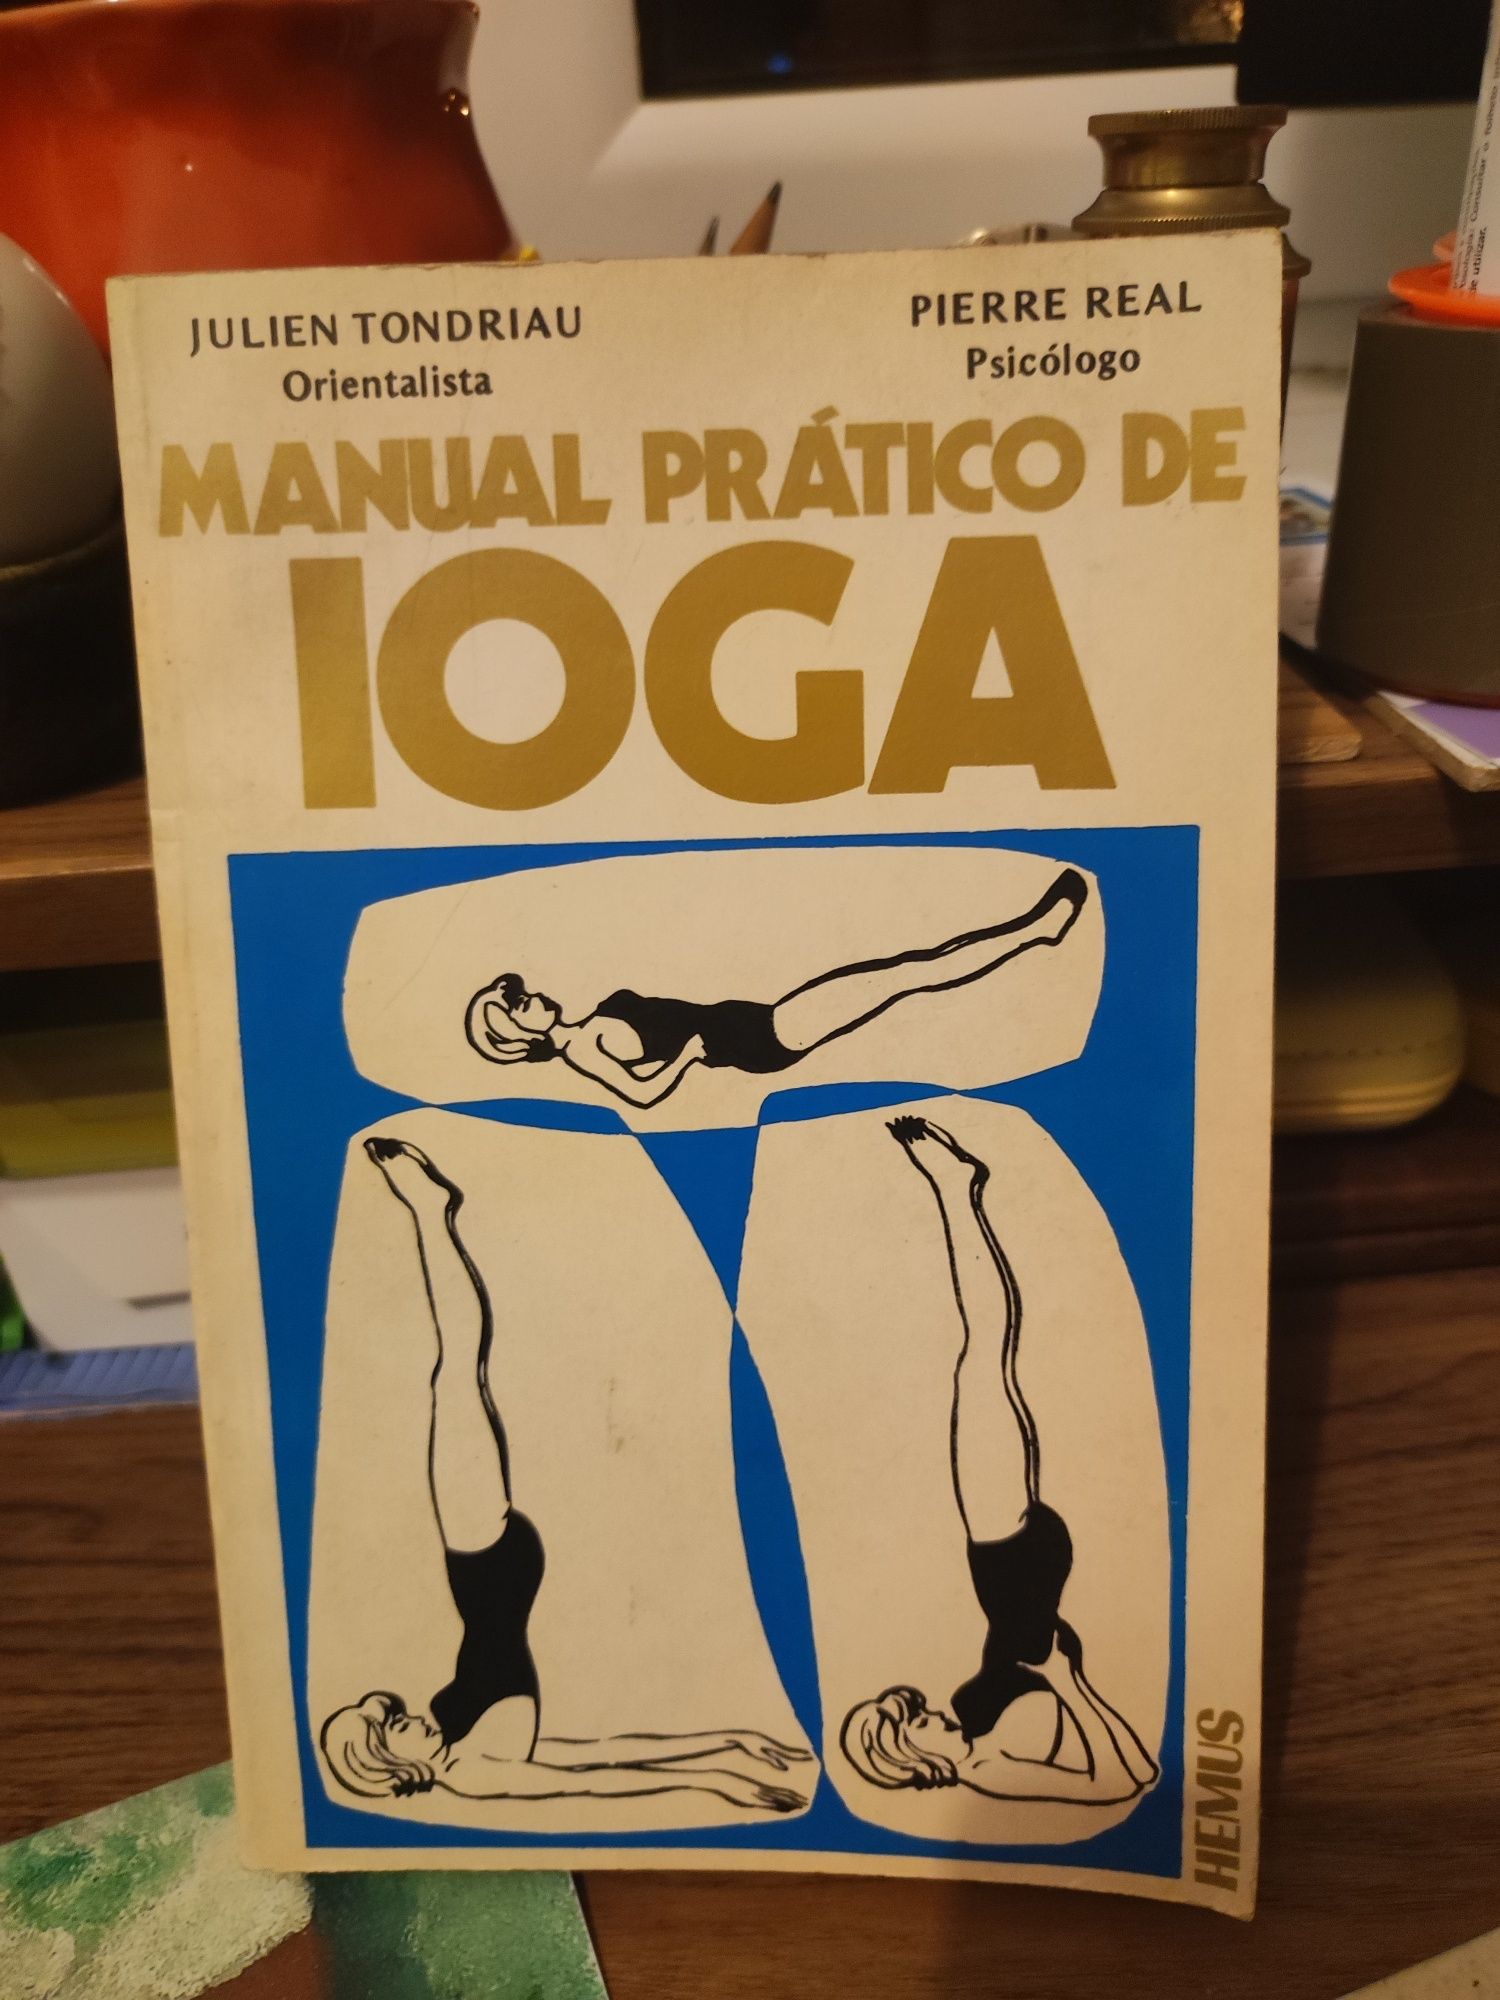 Manual Prático de Ioga - Julien Trondiau & Pierre Real